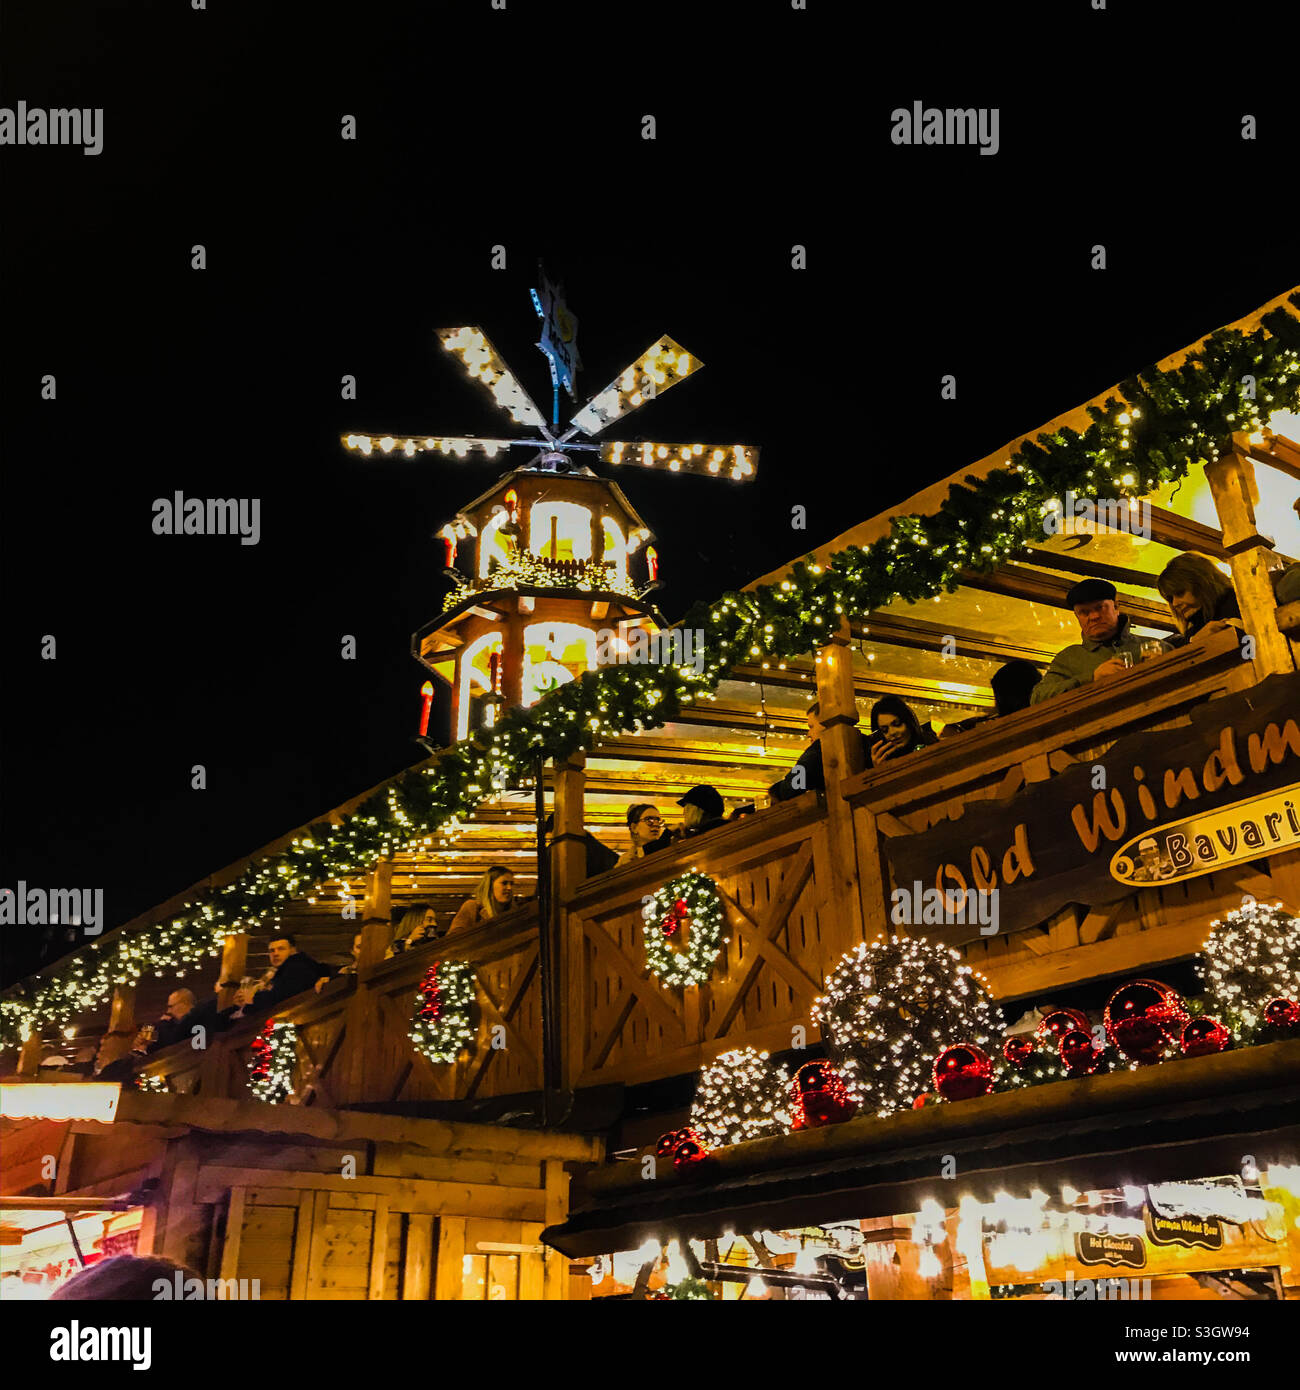 Manchester Christmas market stall Stock Photo